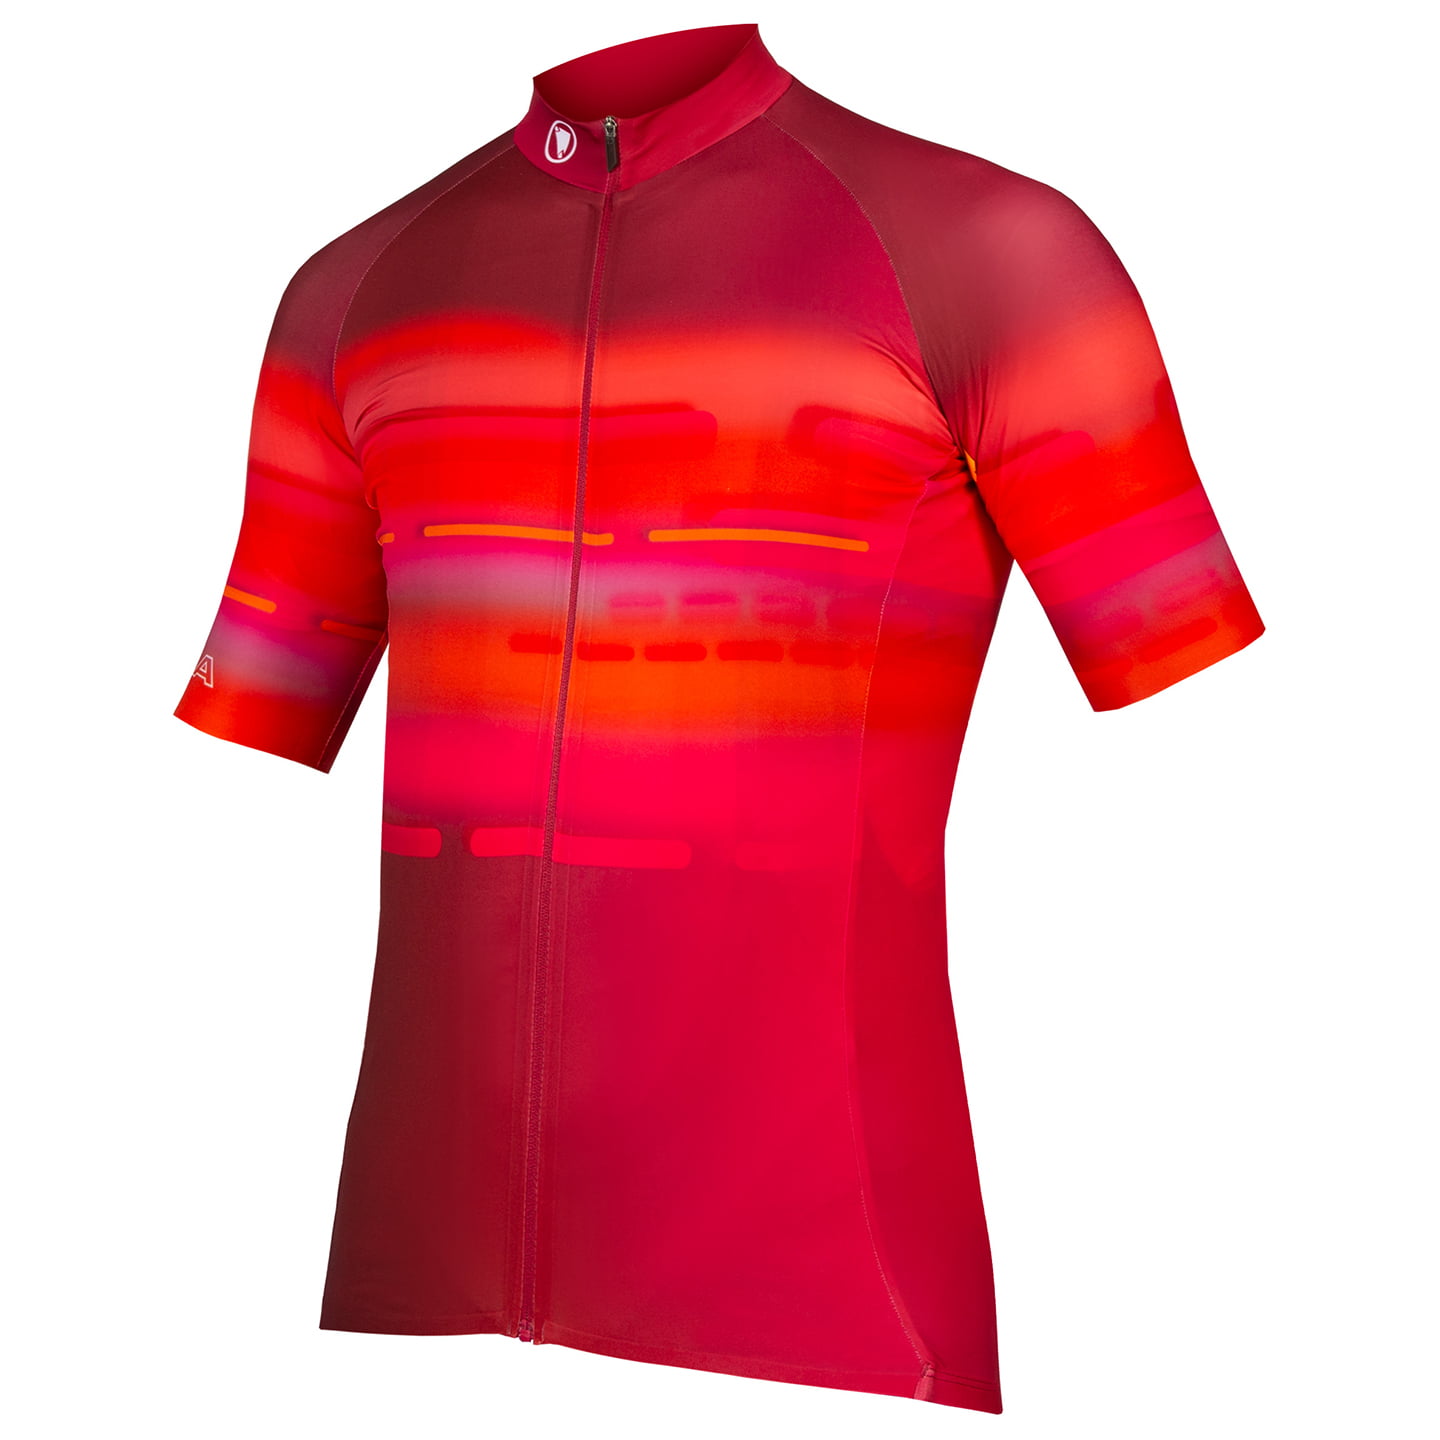 ENDURA Virtual Texture Short Sleeve Jersey Short Sleeve Jersey, for men, size M, Cycling jersey, Cycling clothing